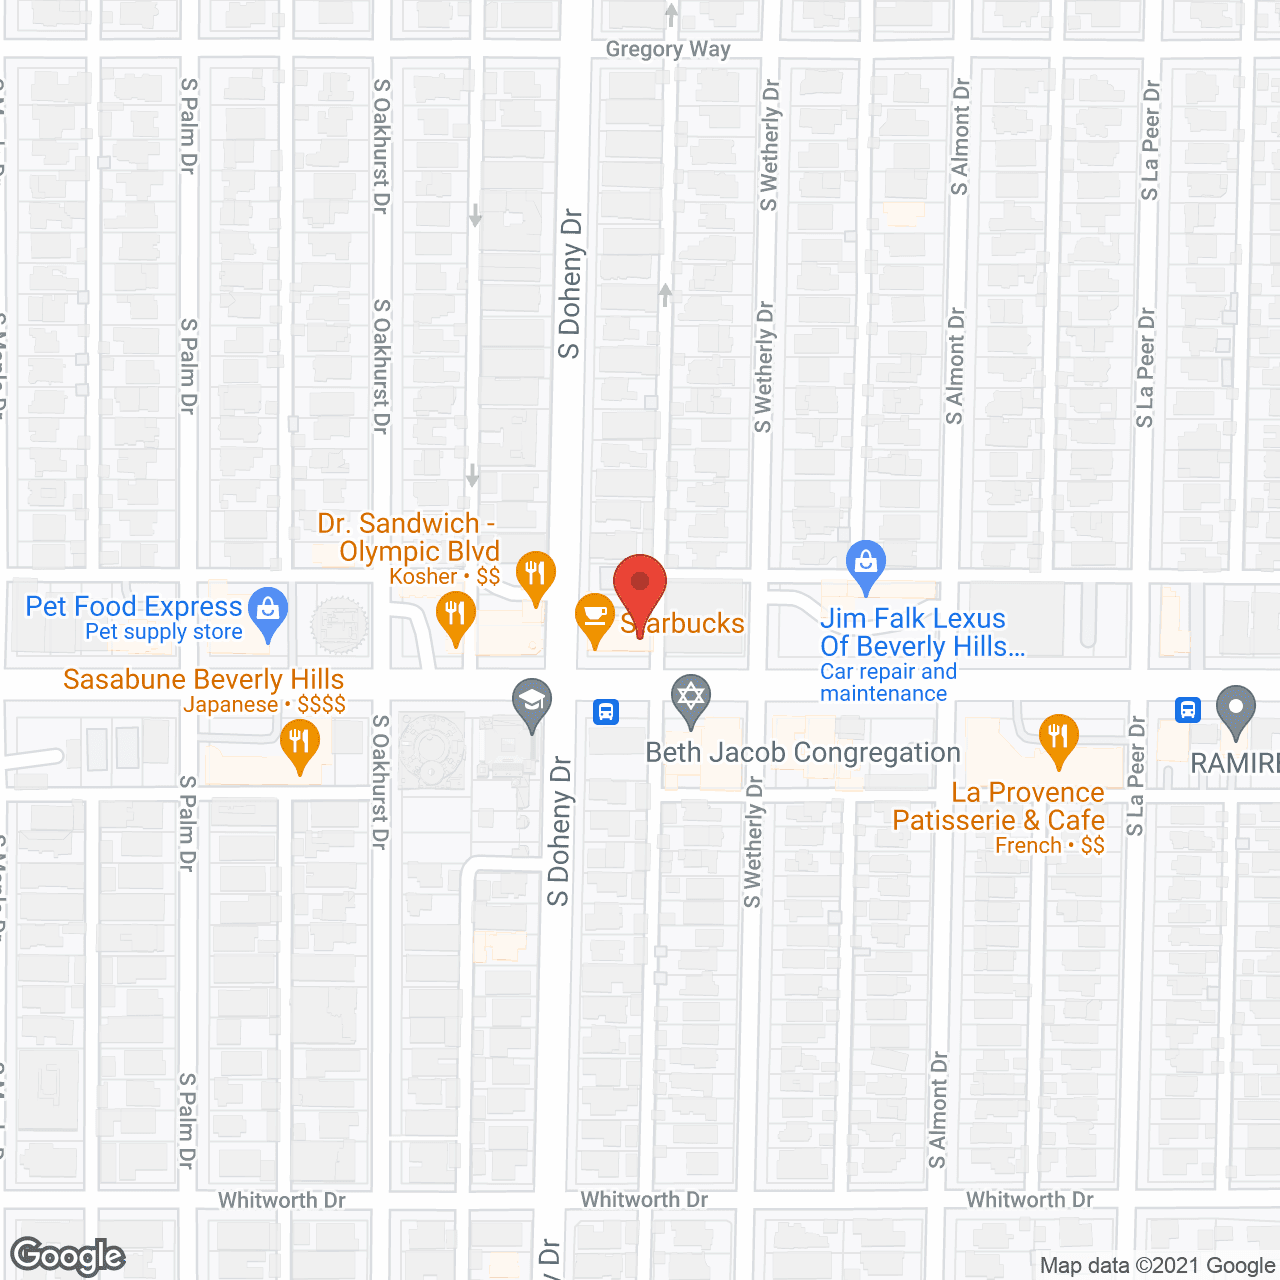 TheKey LA - Beverly Hills/San Dimas in google map